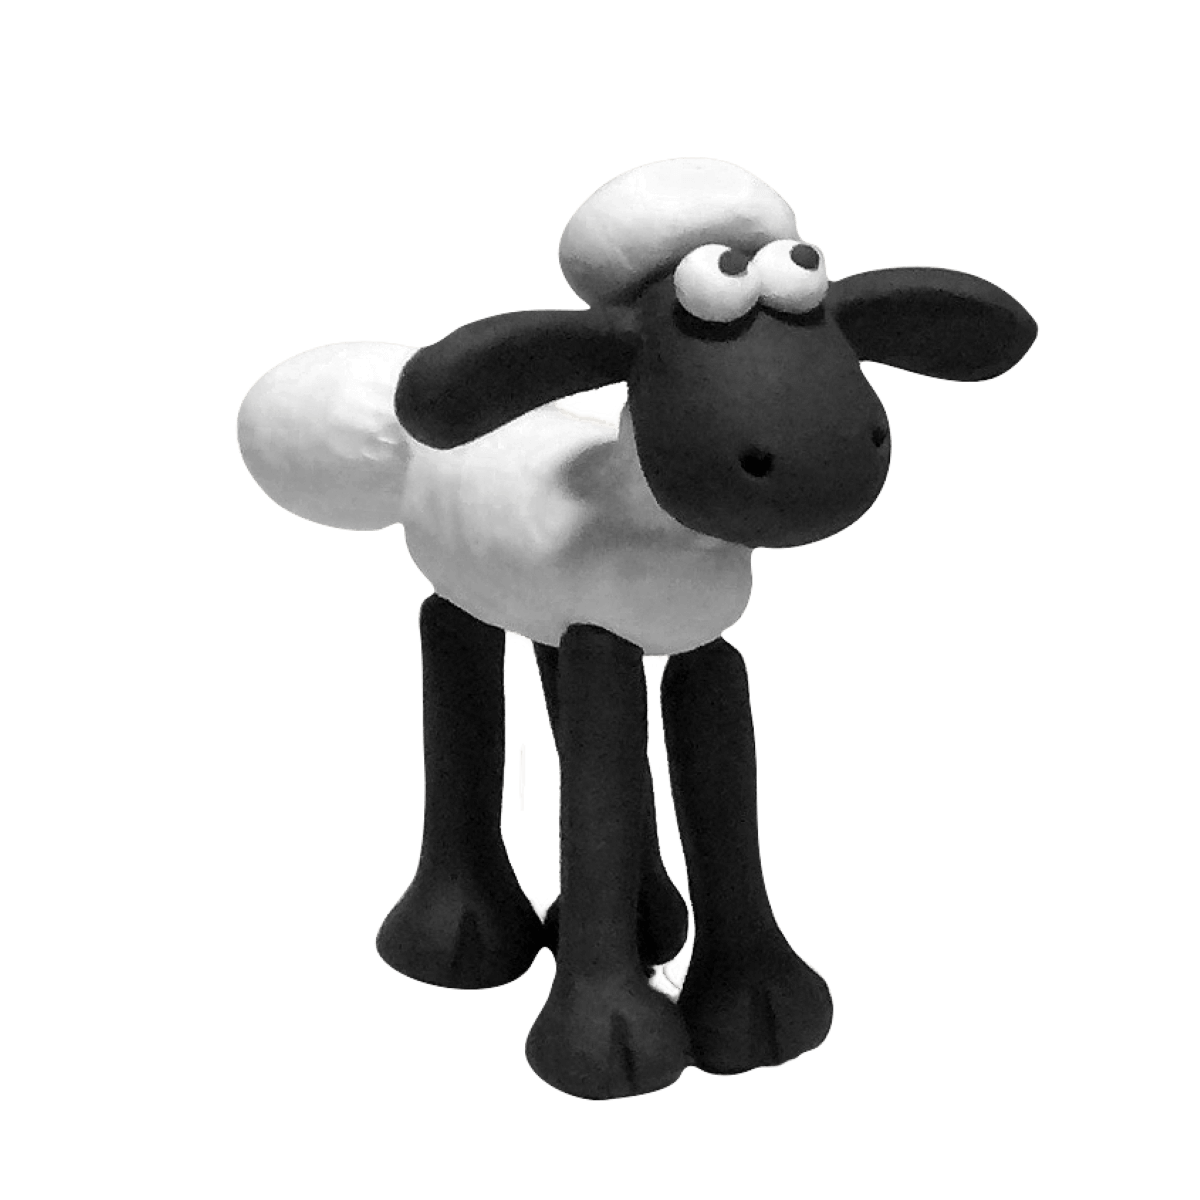 Shaun the sheep